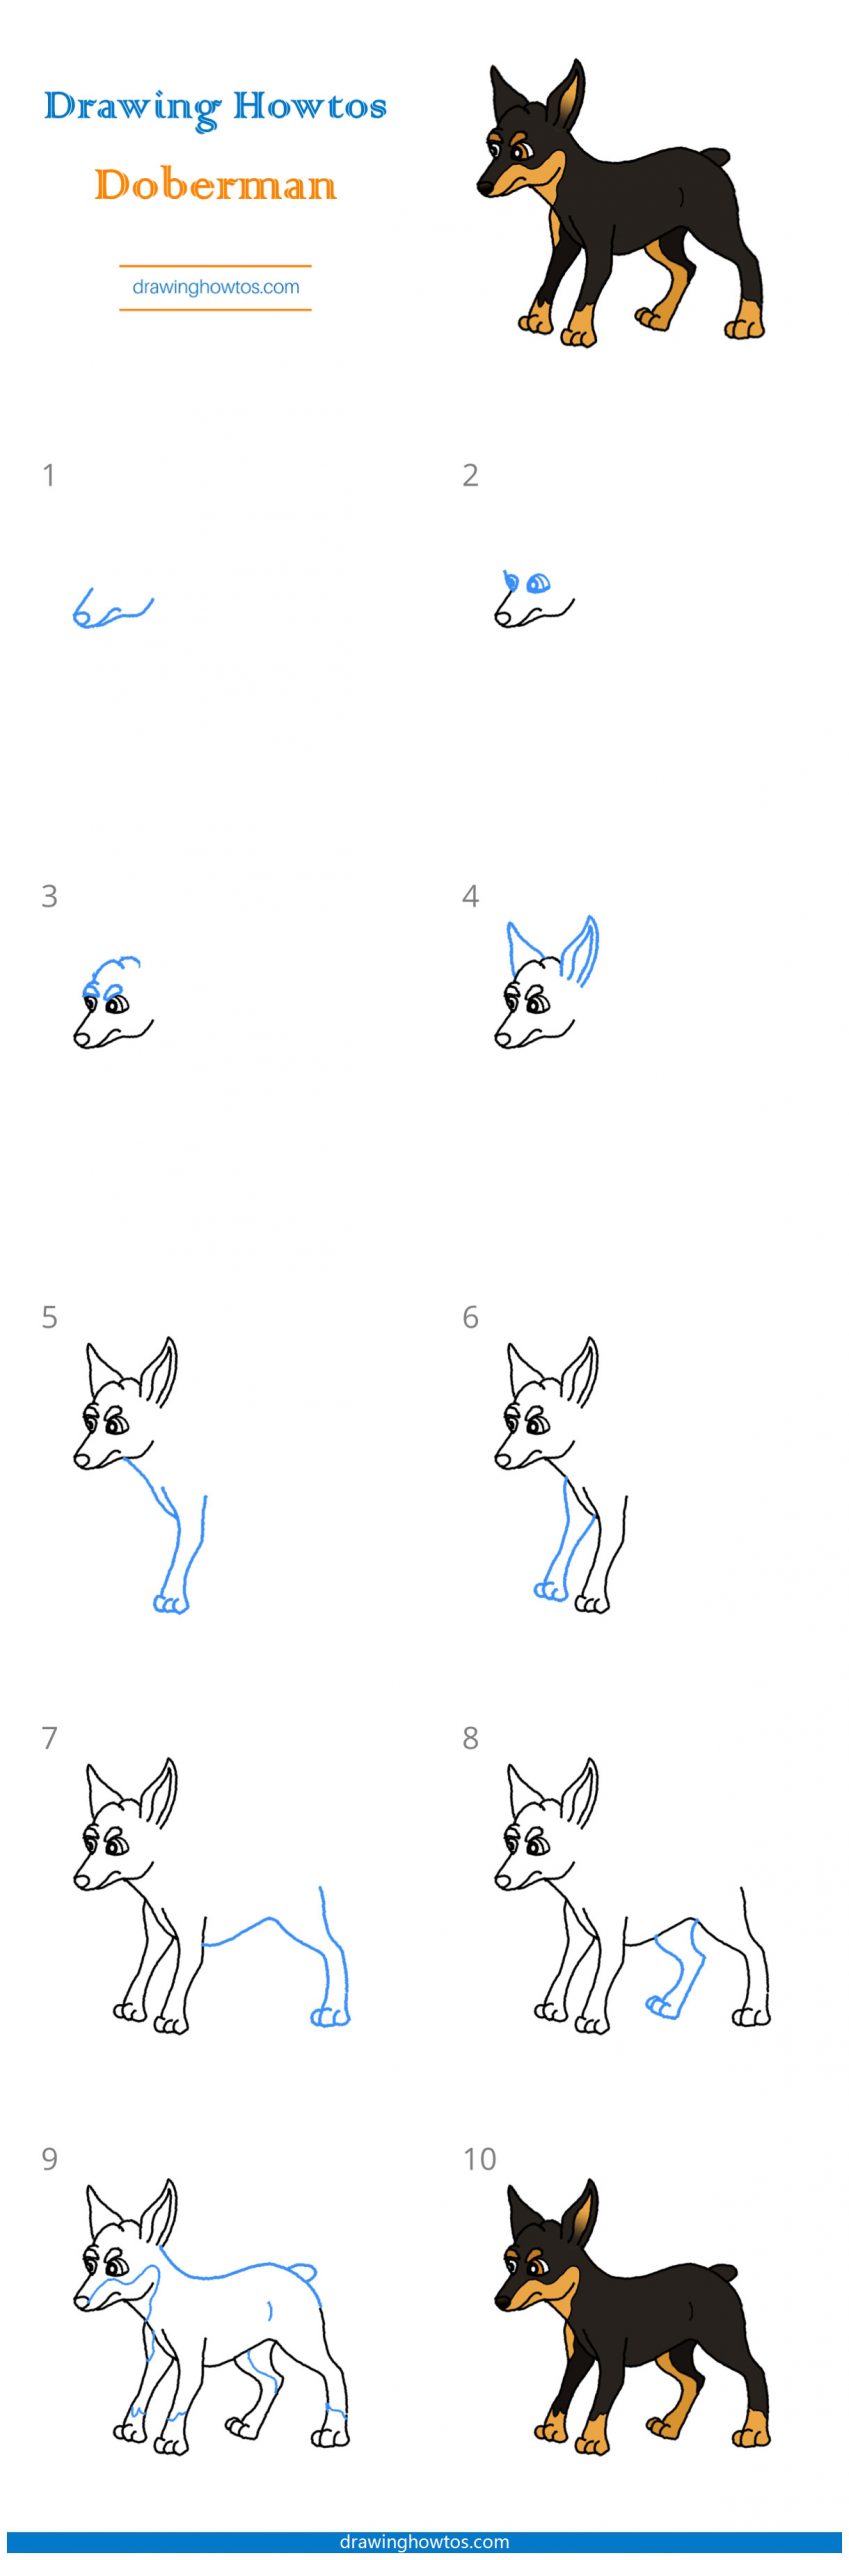 How to Draw a Doberman Step by Step